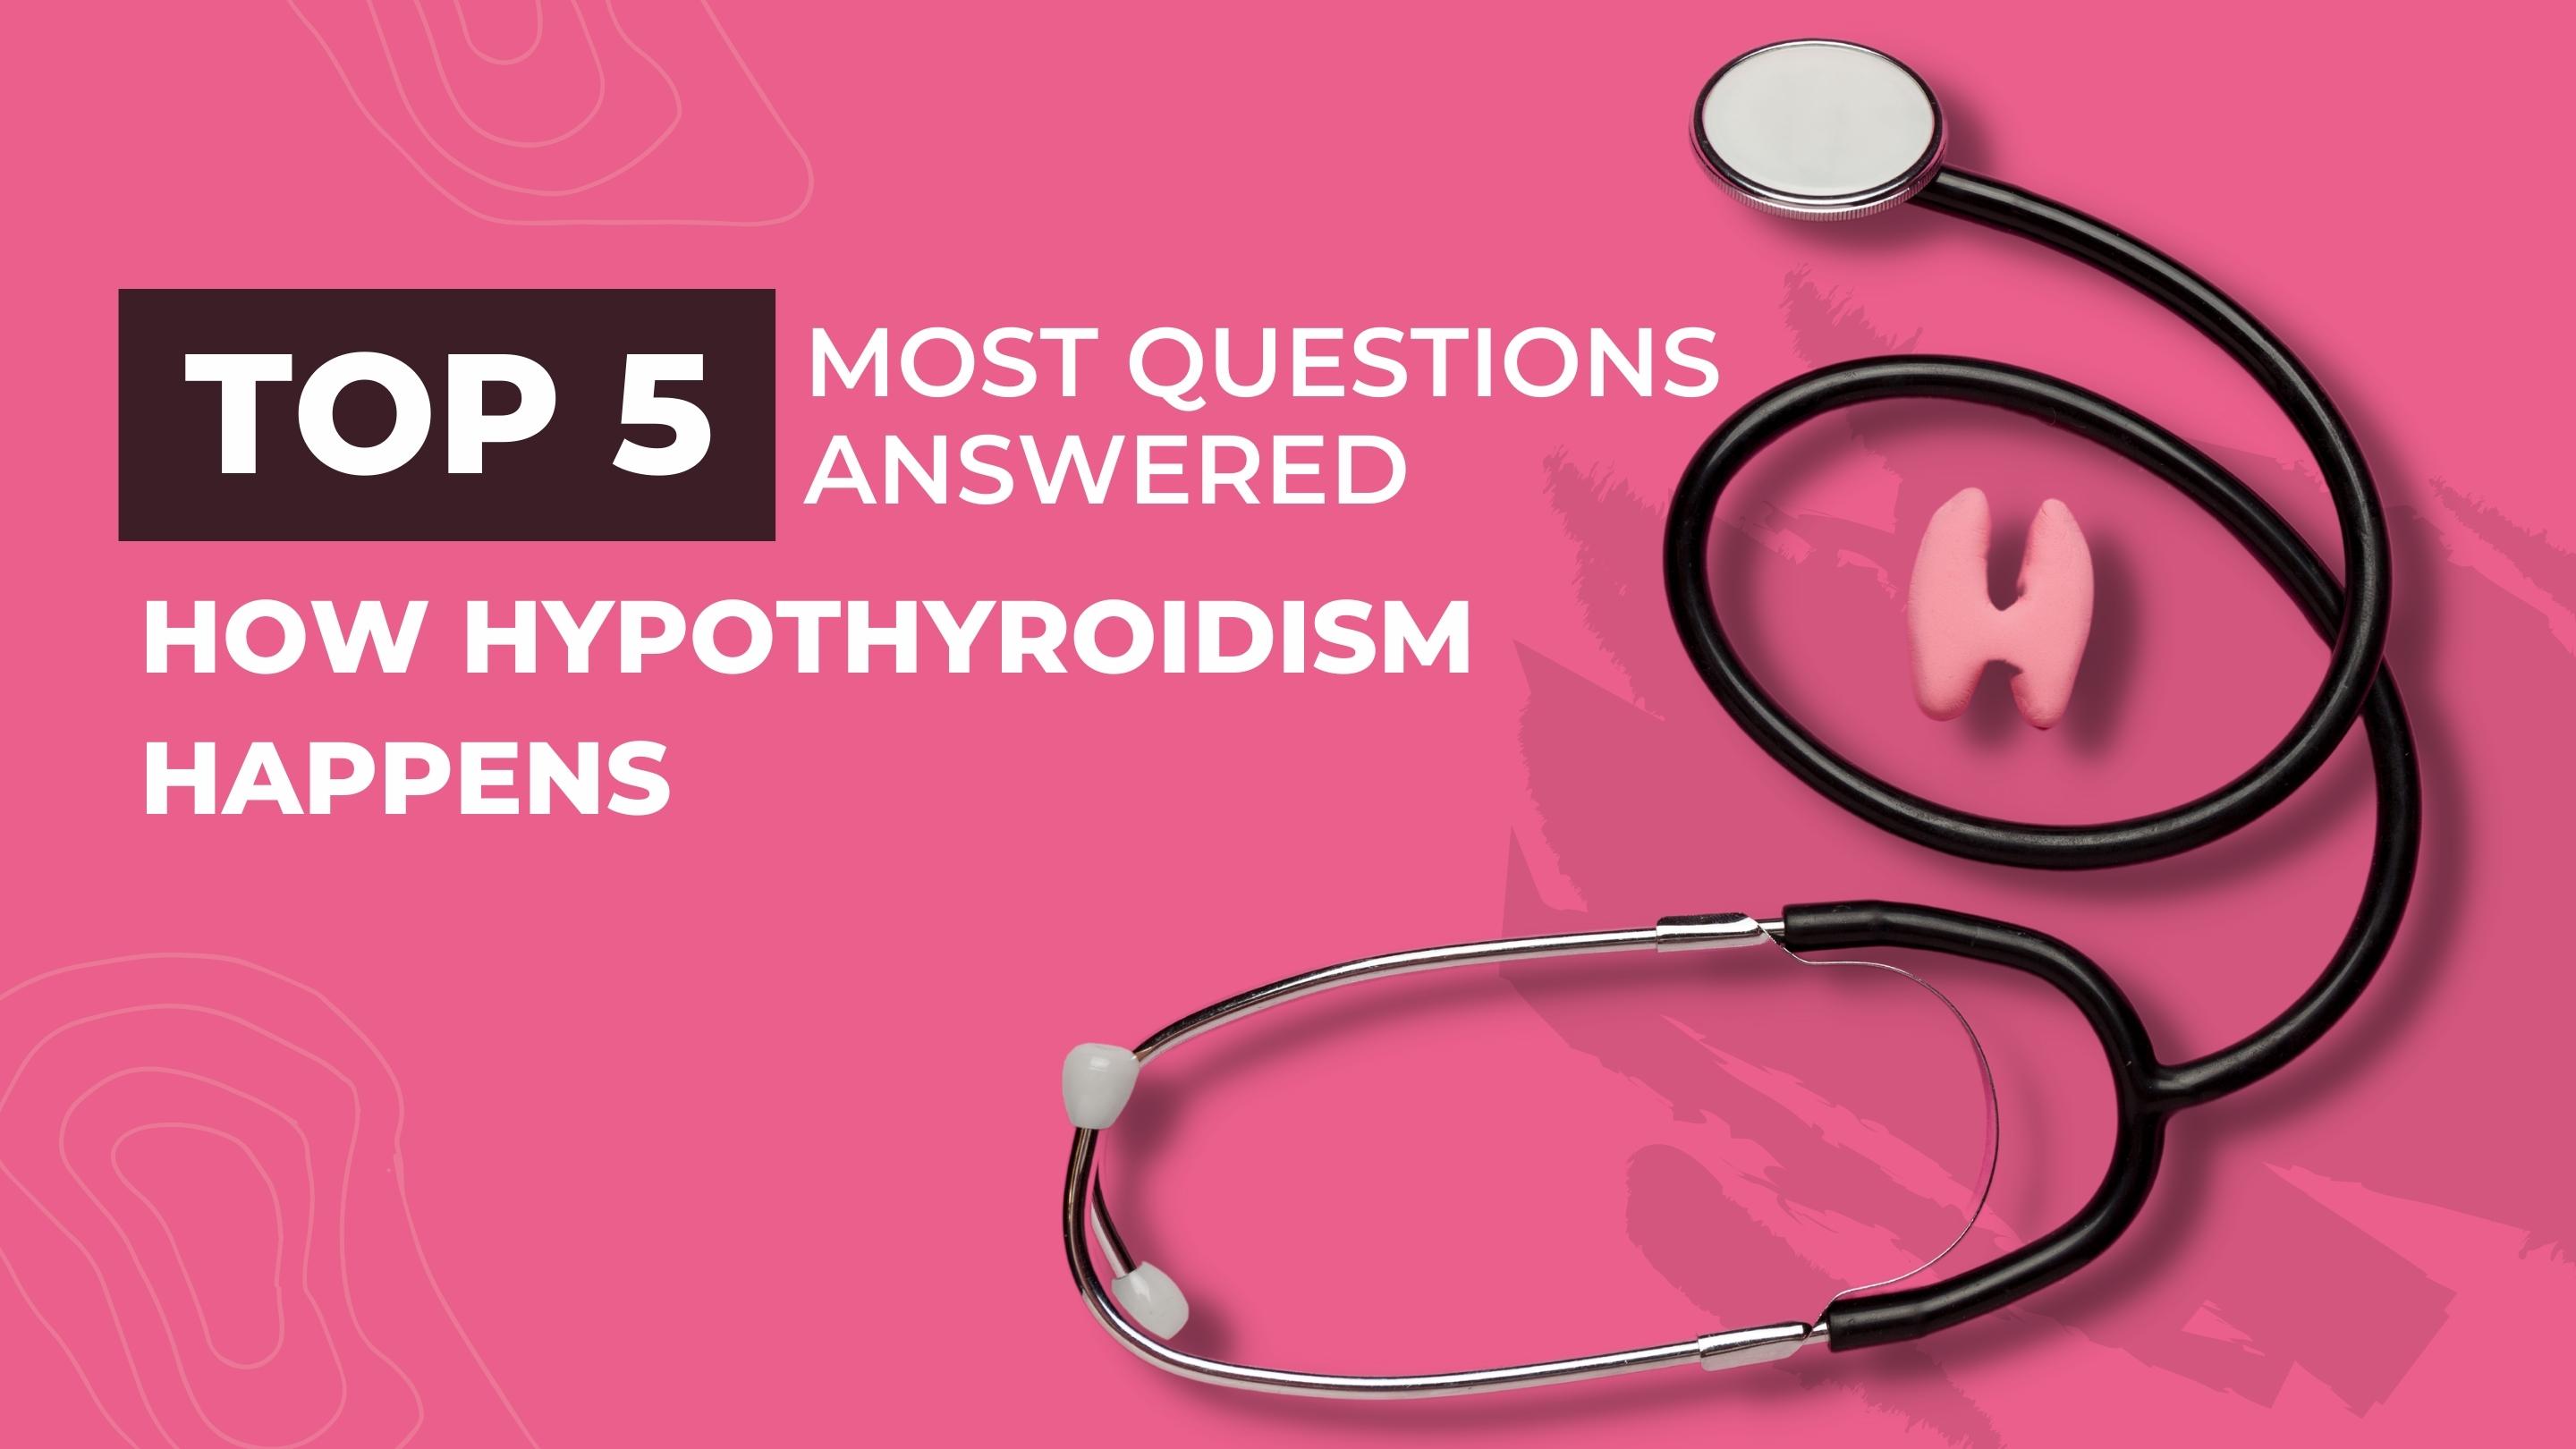 How does hypothyroidism occur?